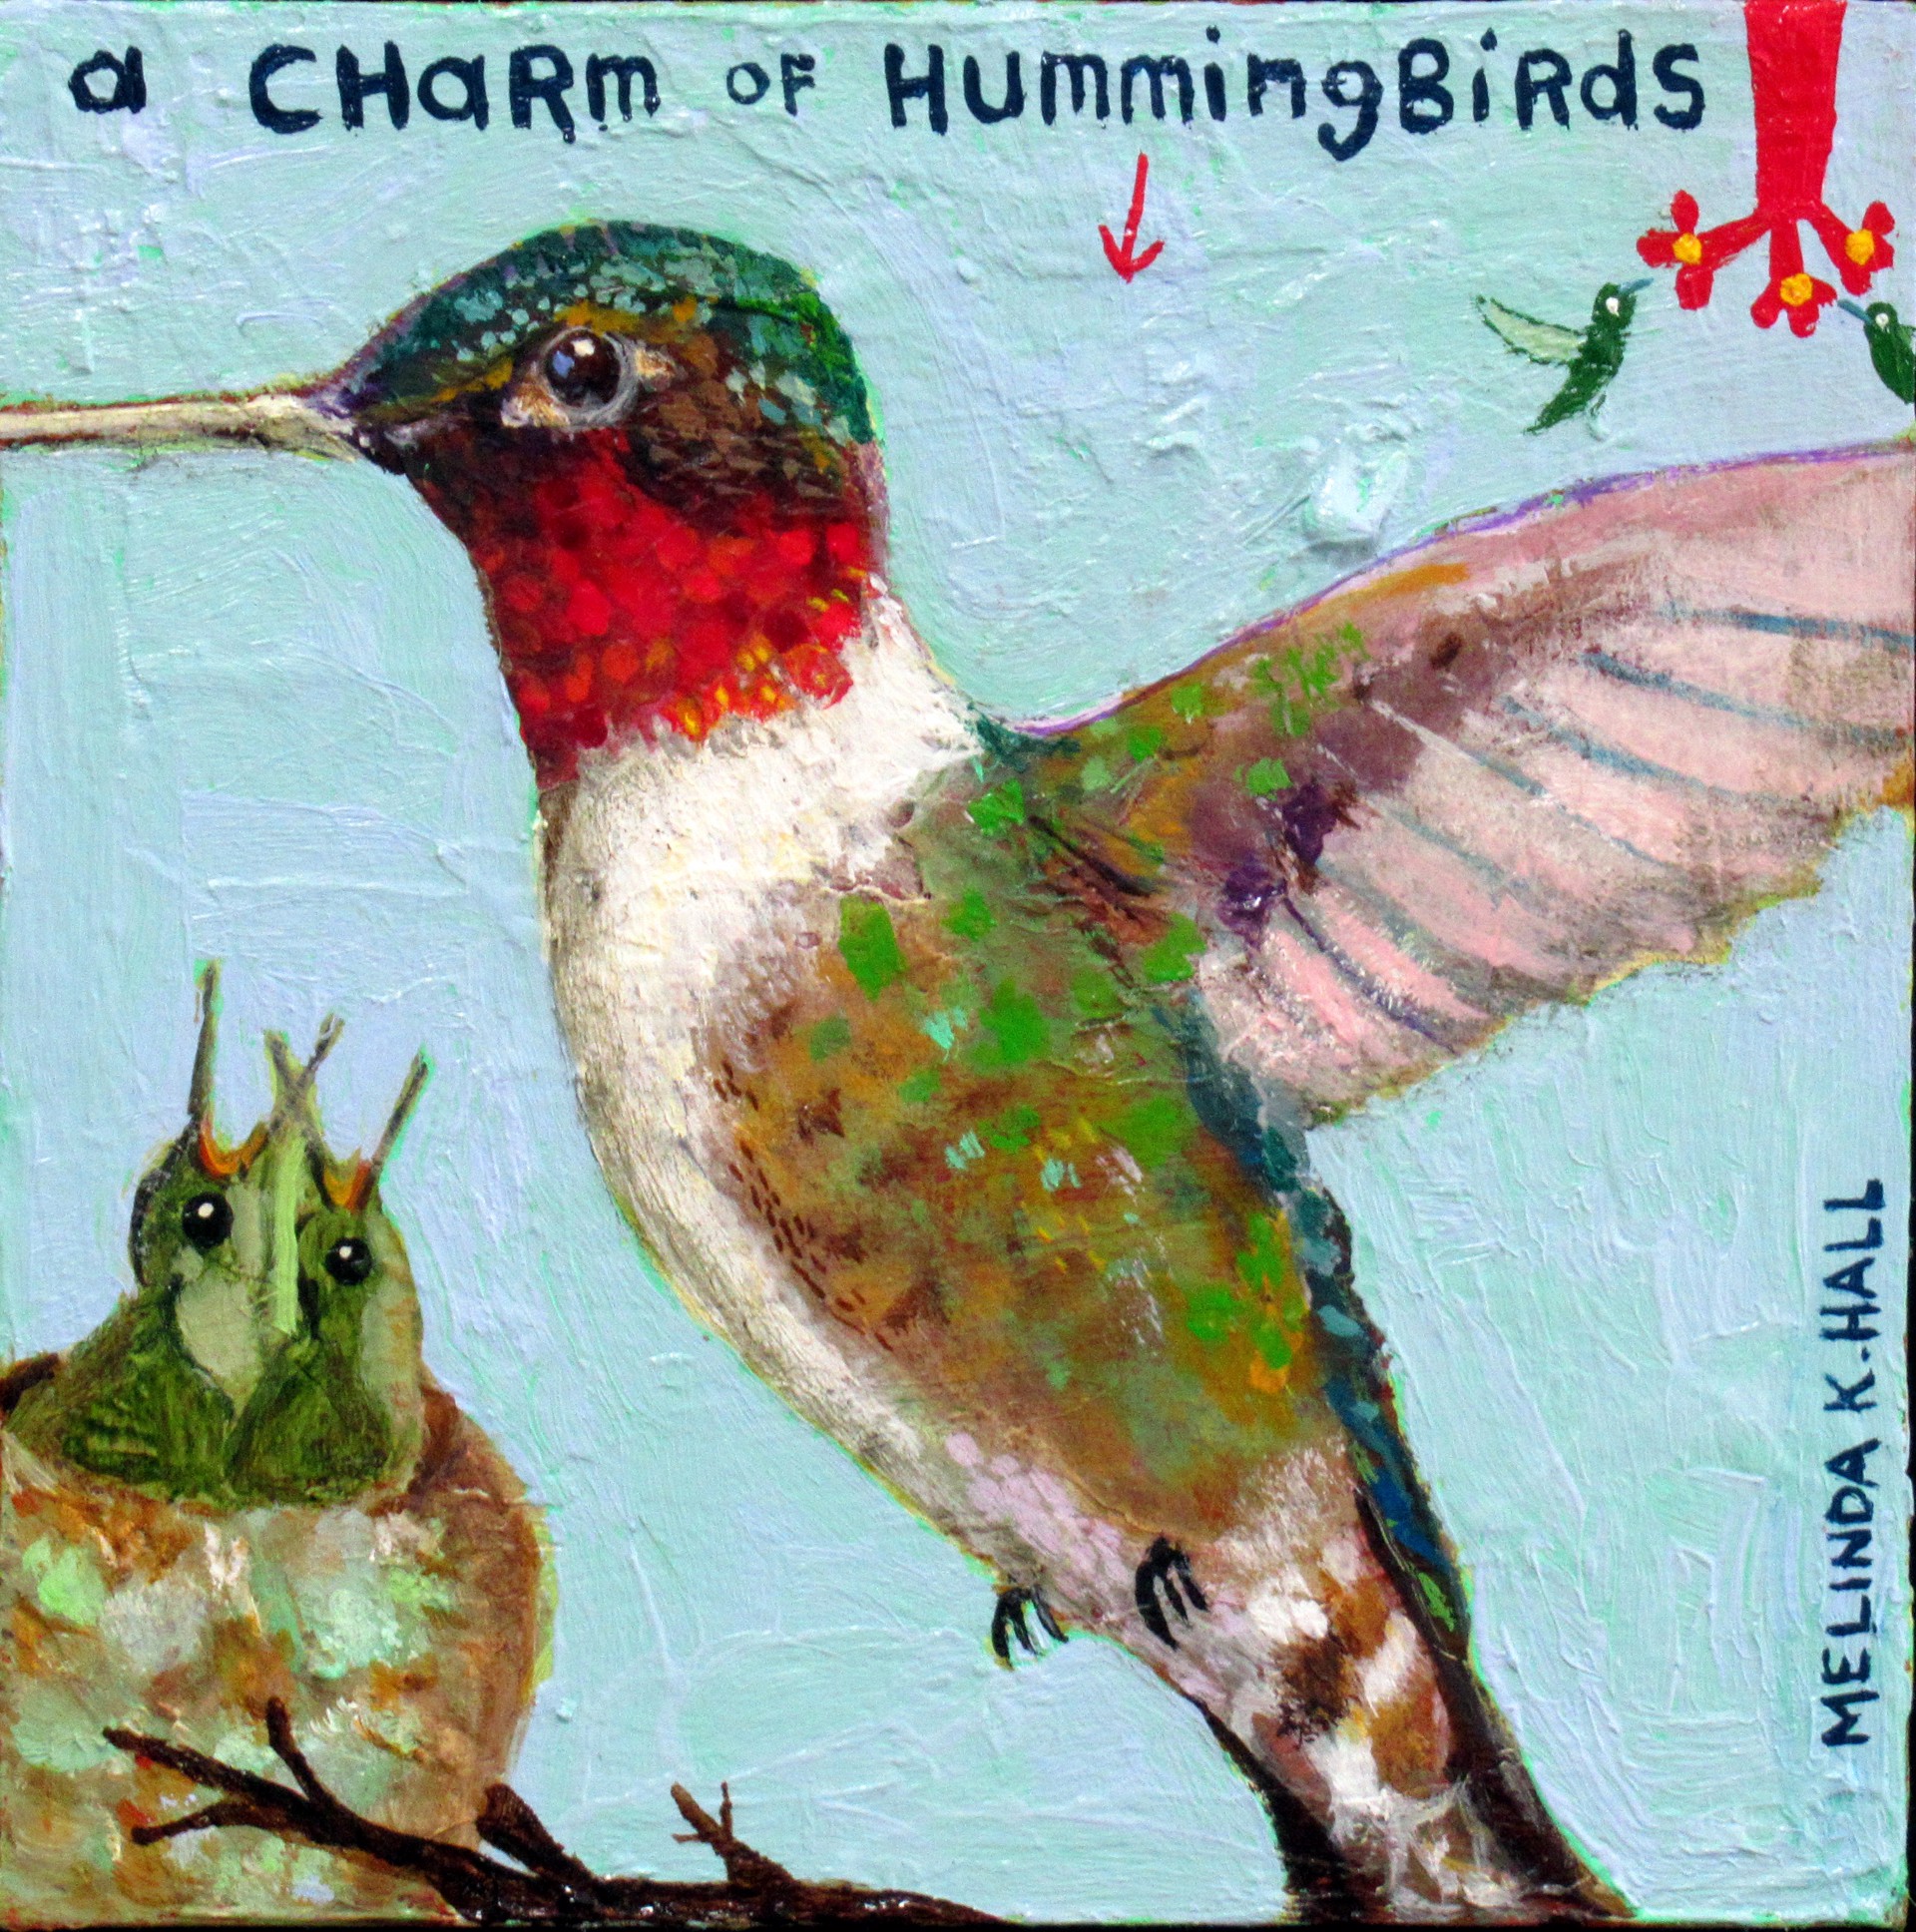 A Charm of Hummingbirds by Melinda K. Hall